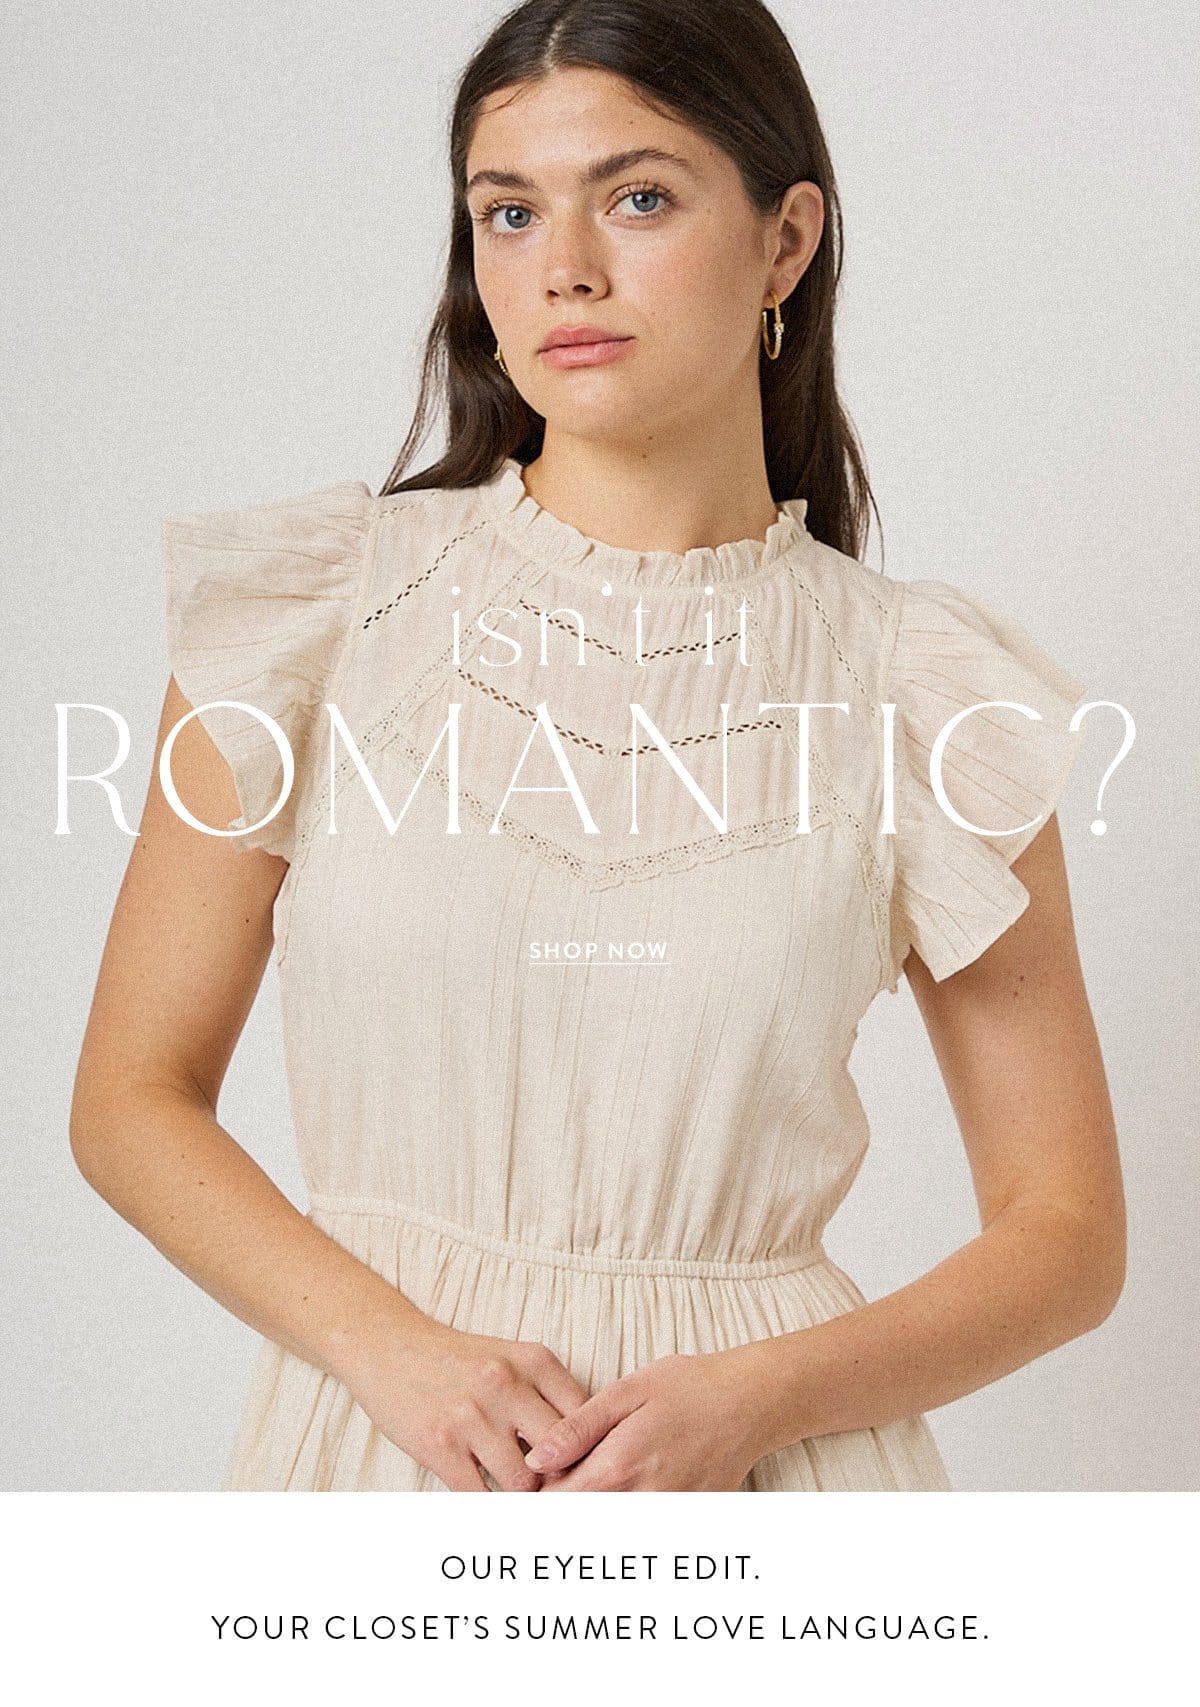 ISN’T IT ROMANTIC? Our eyelet edit. Your closet’s summer love language.